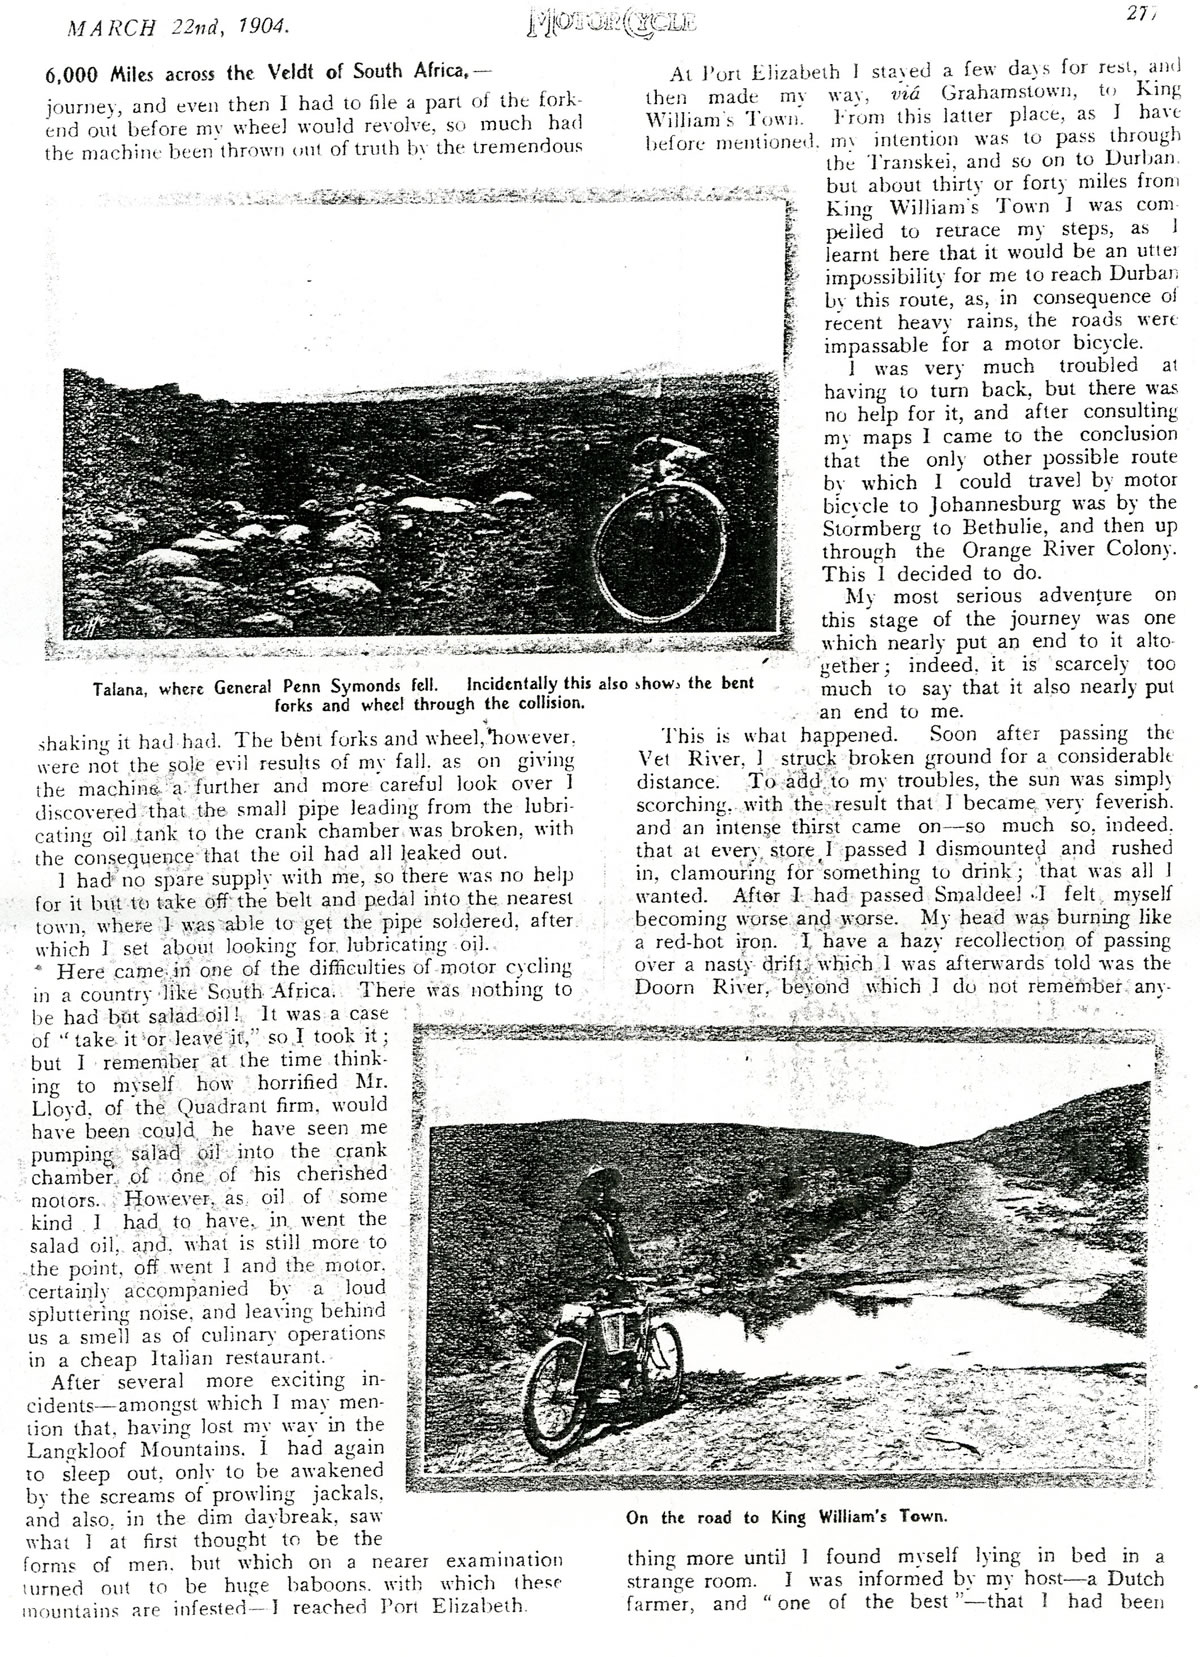 1903 Quadrant MotorCycle Tom Silver